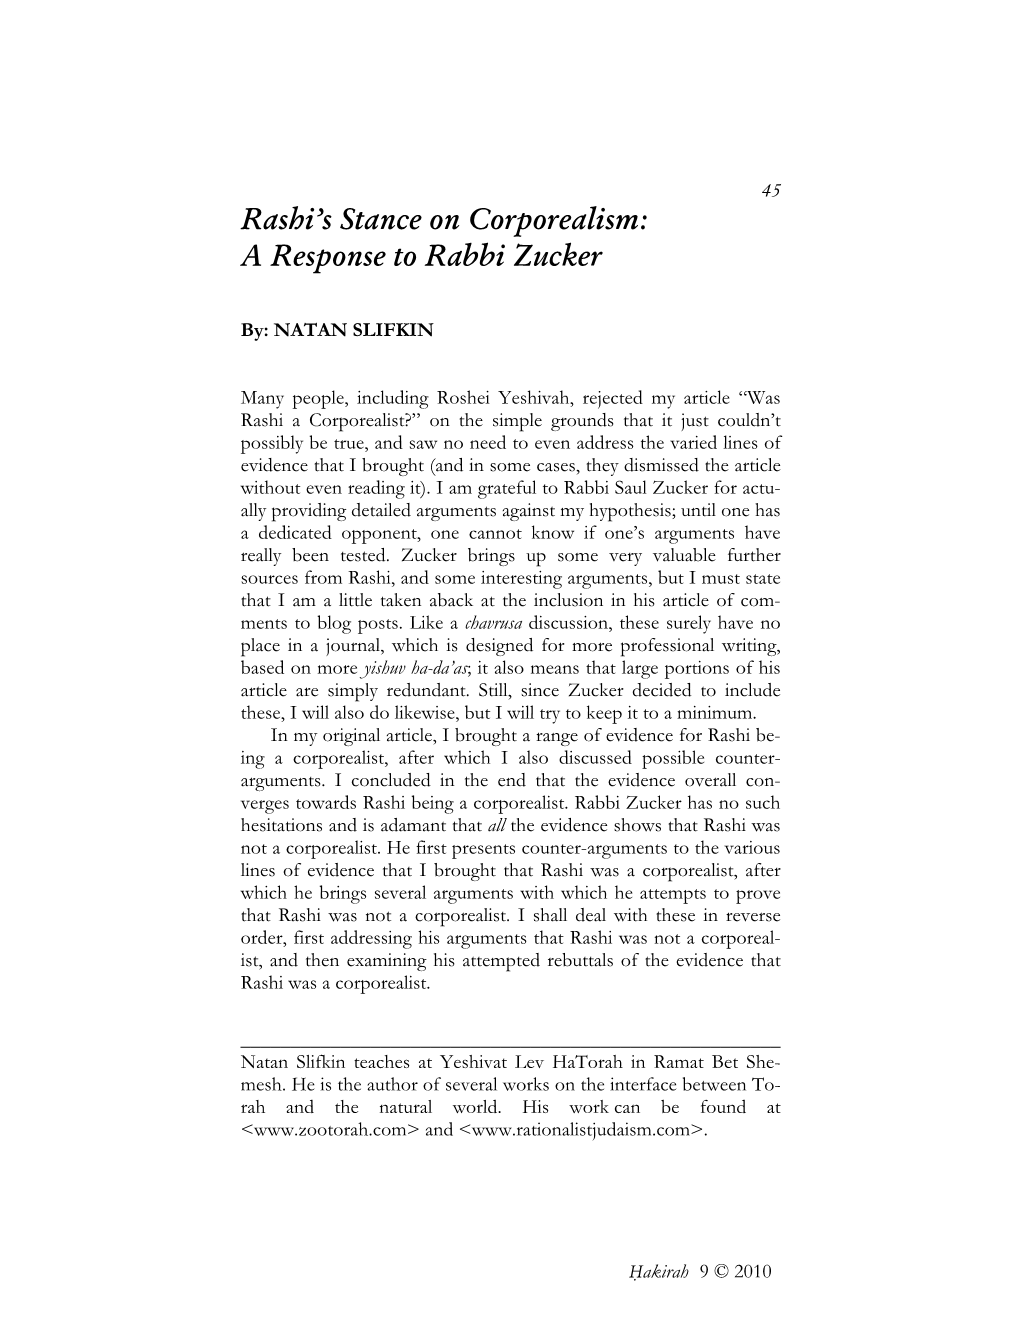 Rashi's Stance on Corporealism: a Response to Rabbi Zucker